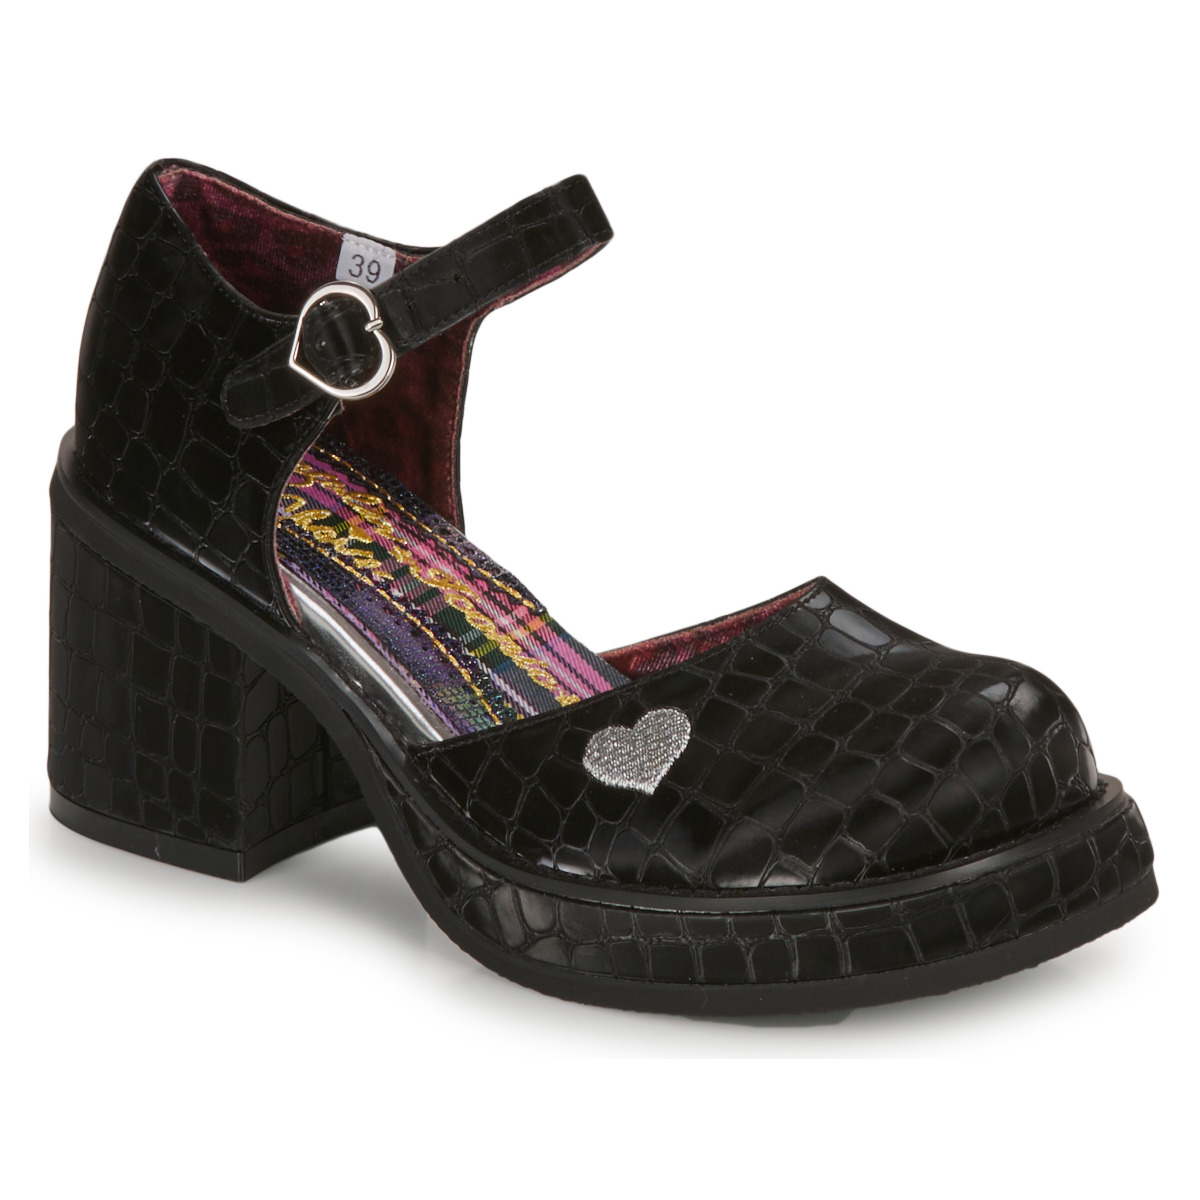 Pantofi Femei Pantofi cu toc Irregular Choice NIGHT FEVER Negru